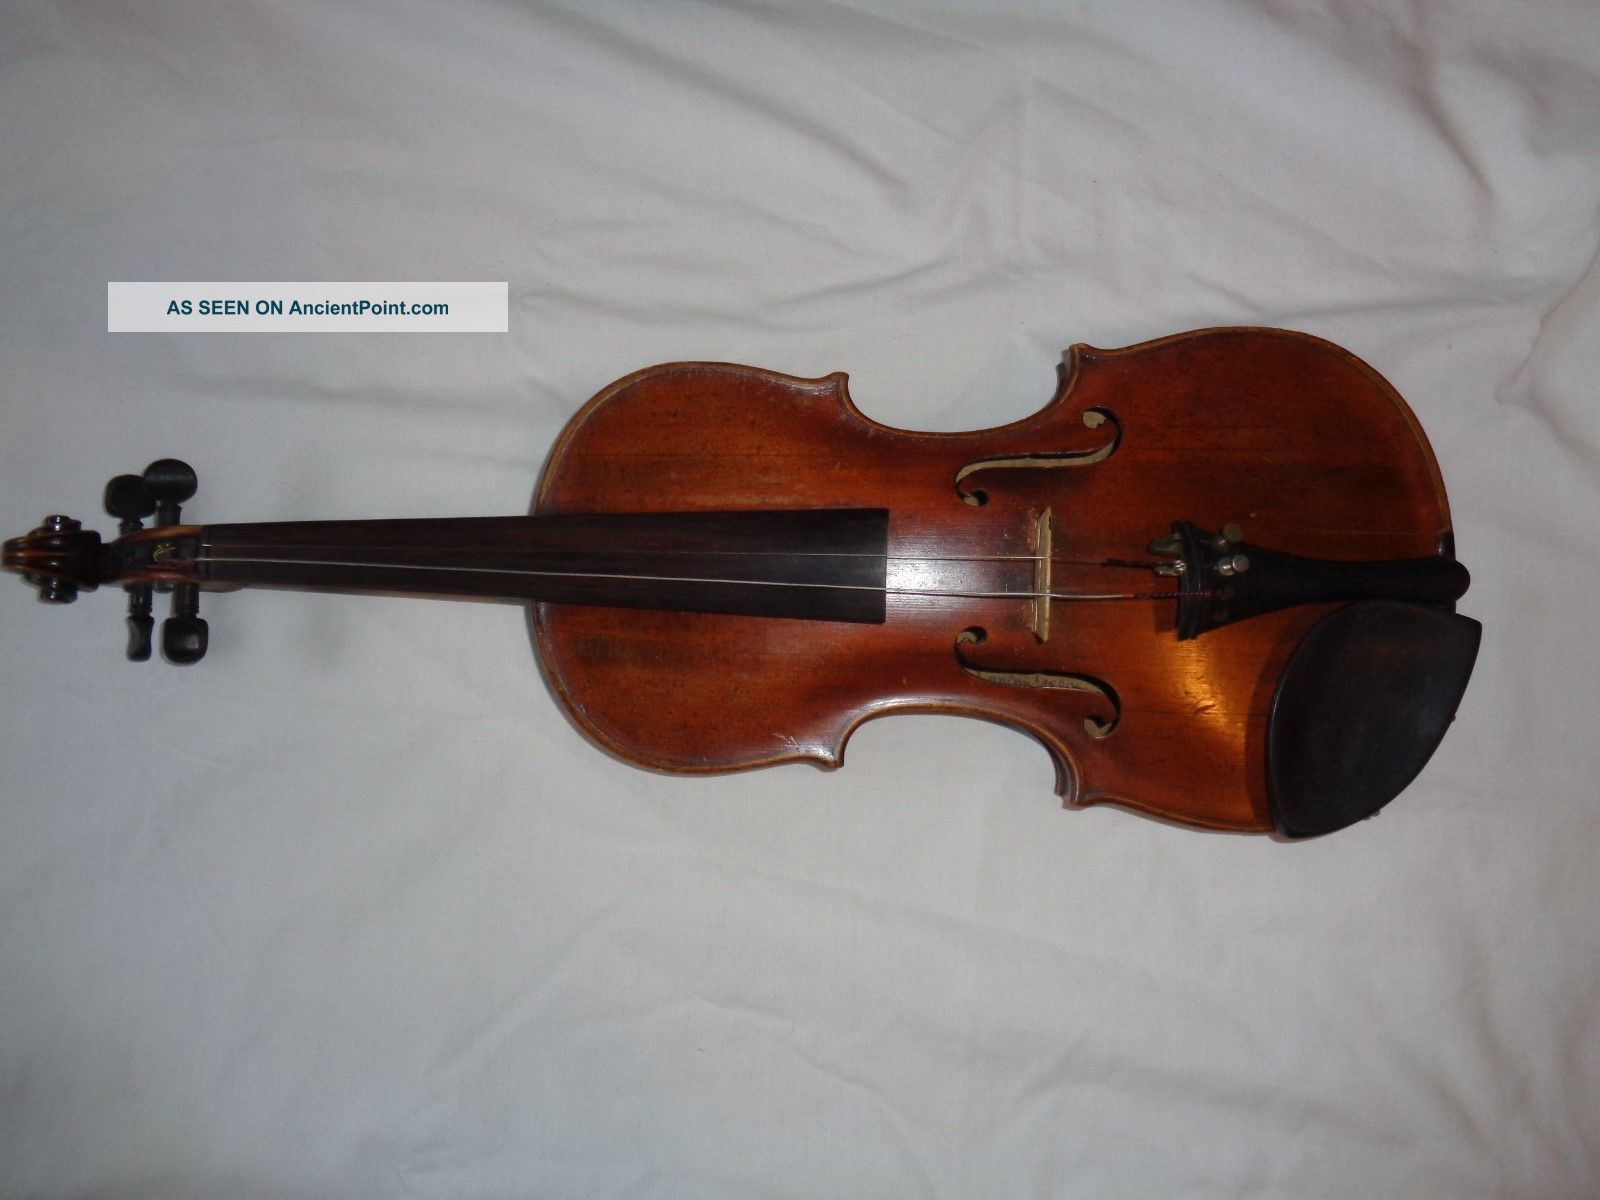 Antique Violin 1800s Reproduction Jakob Reymann London String photo